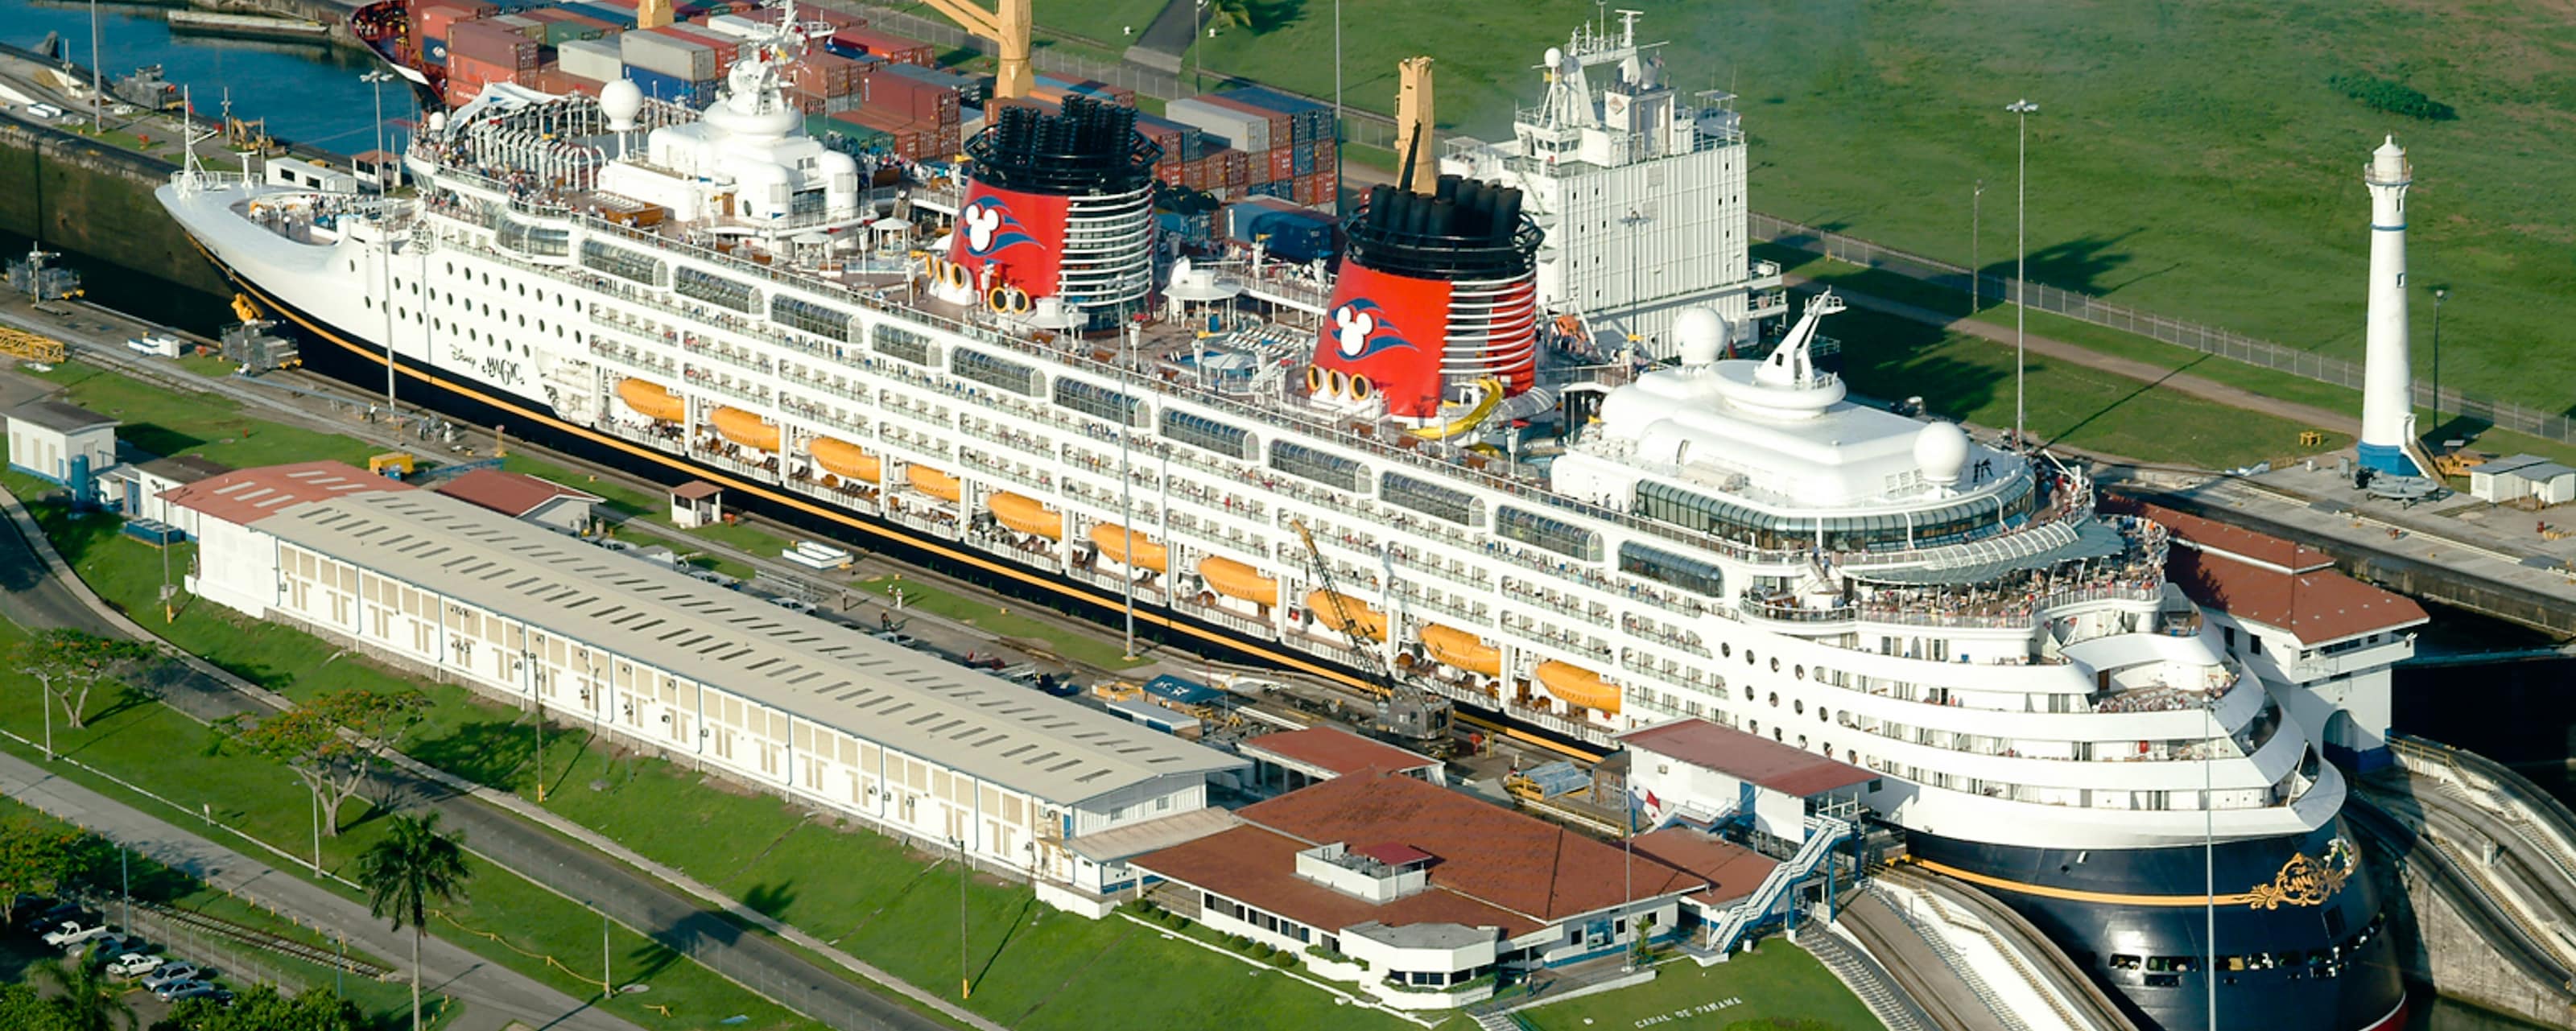 disney panama canal cruise 2023